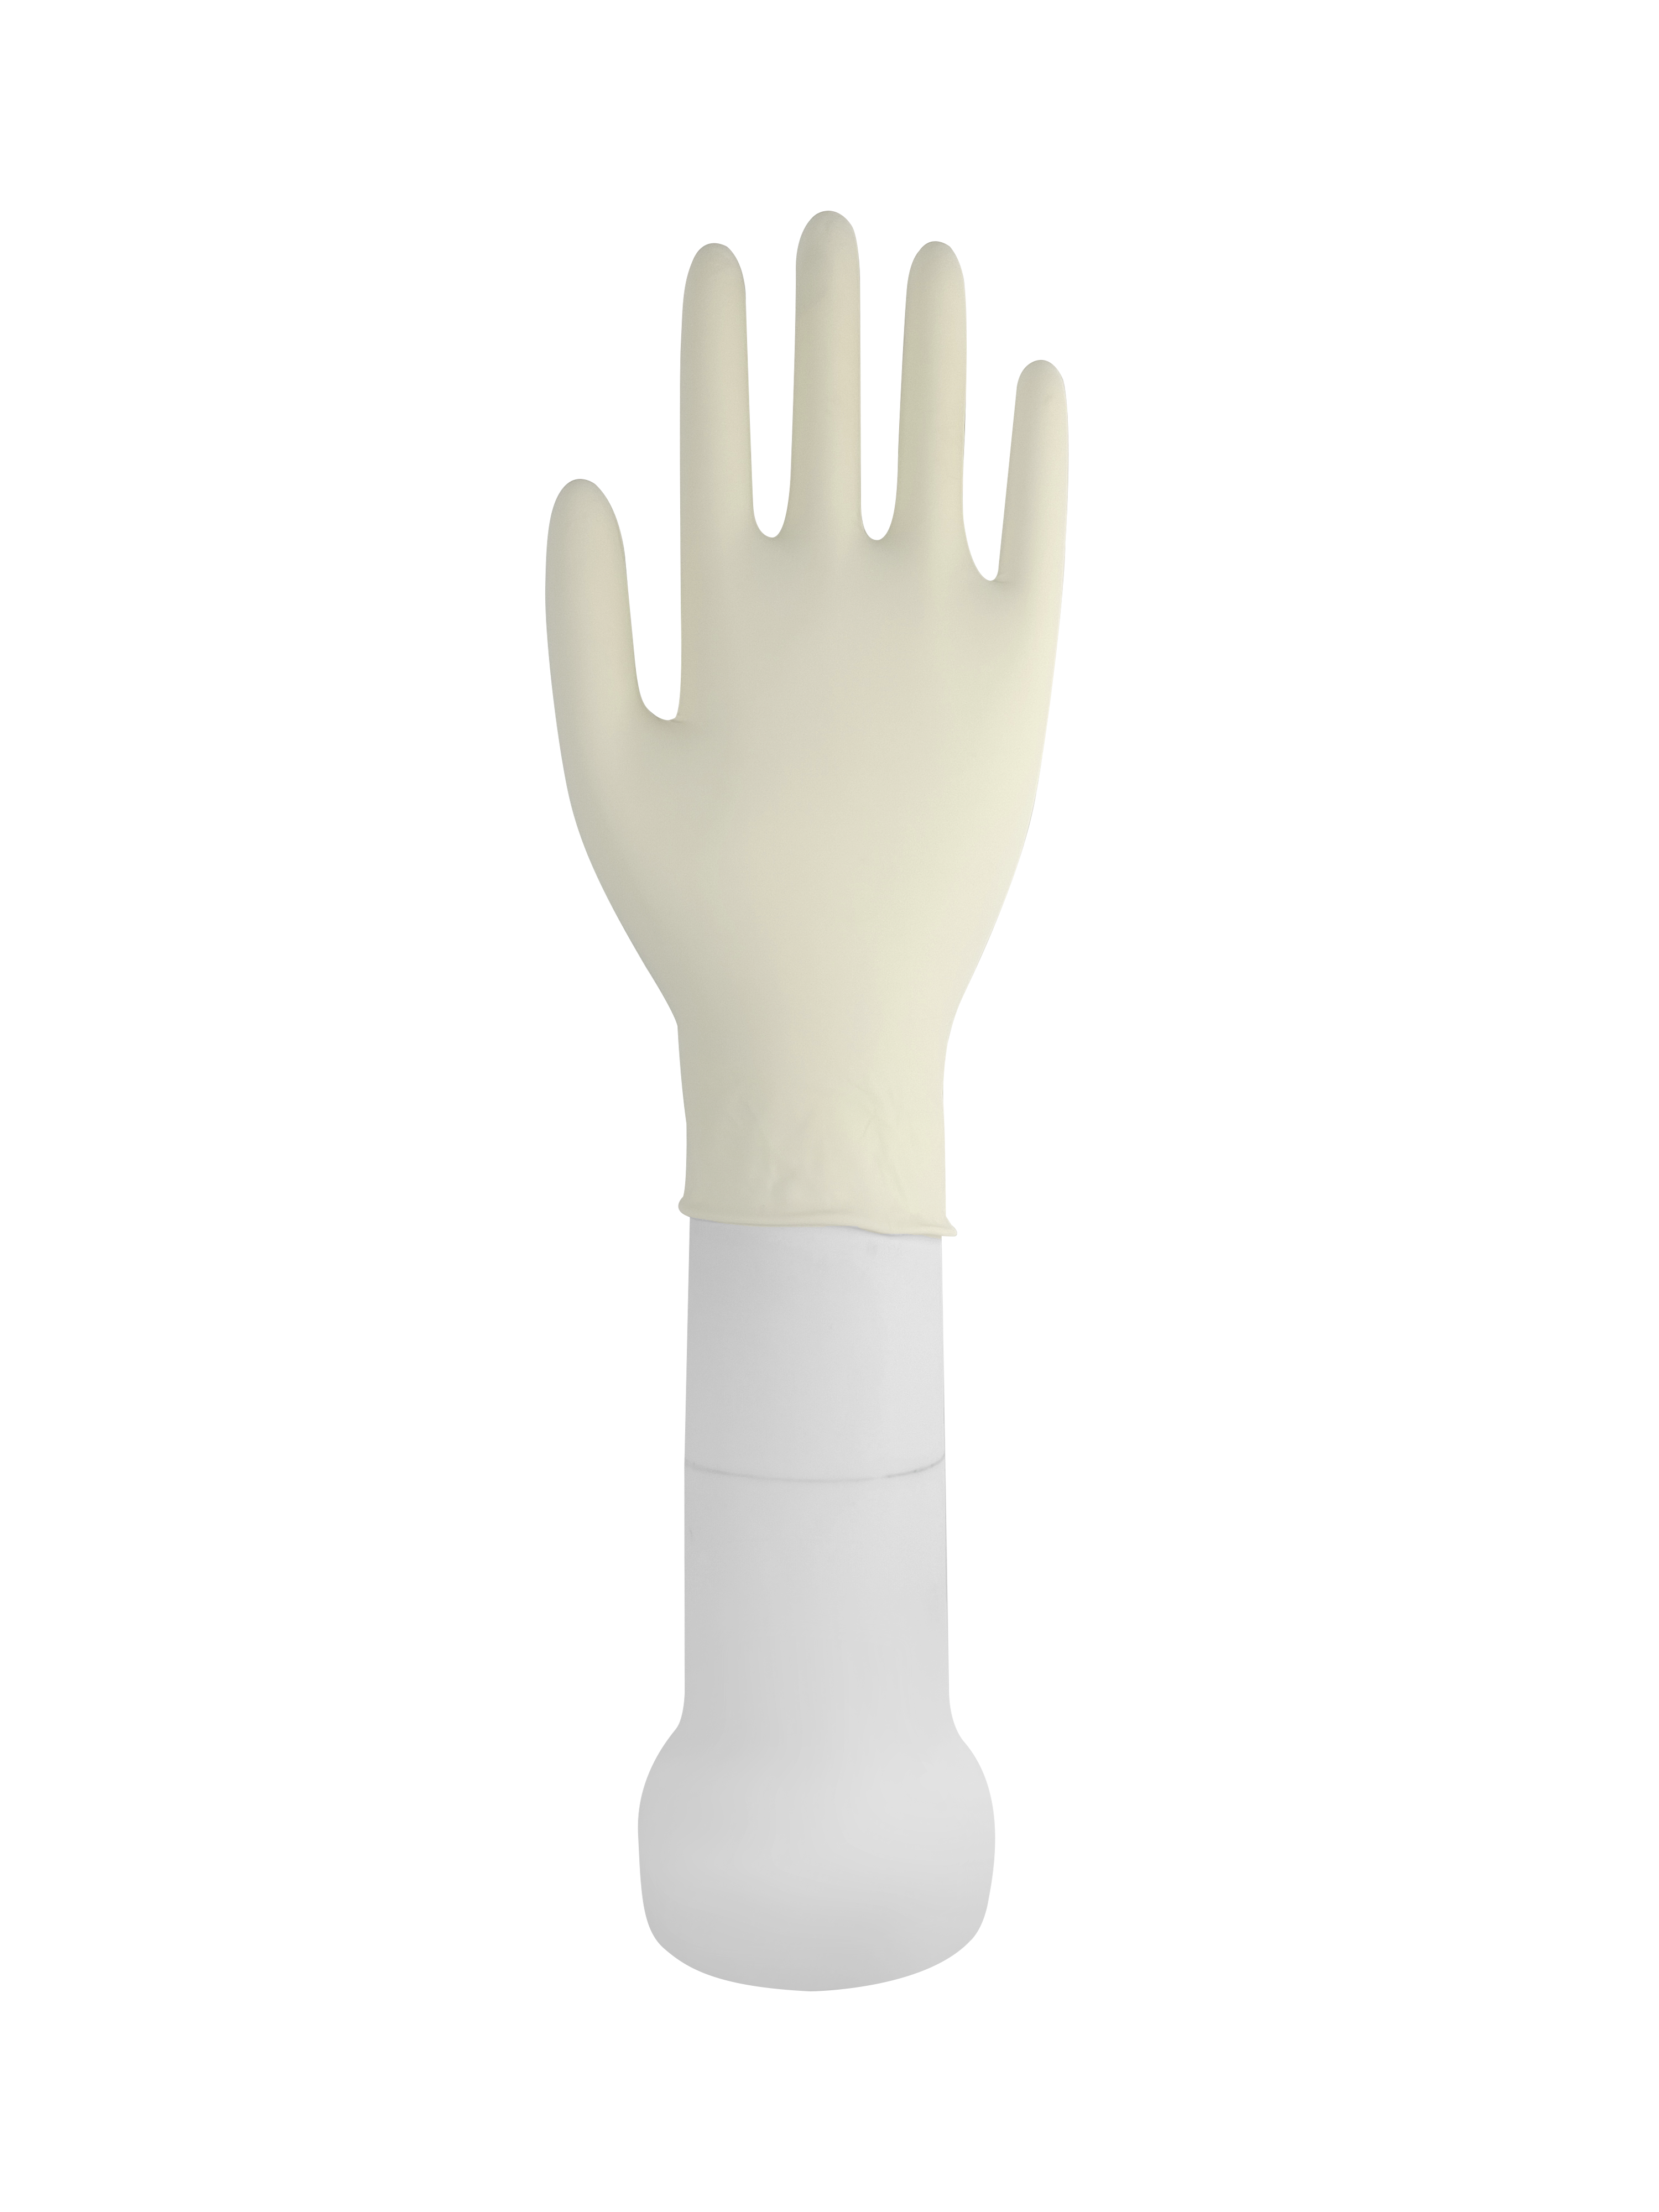 Disposable rubber examination gloves